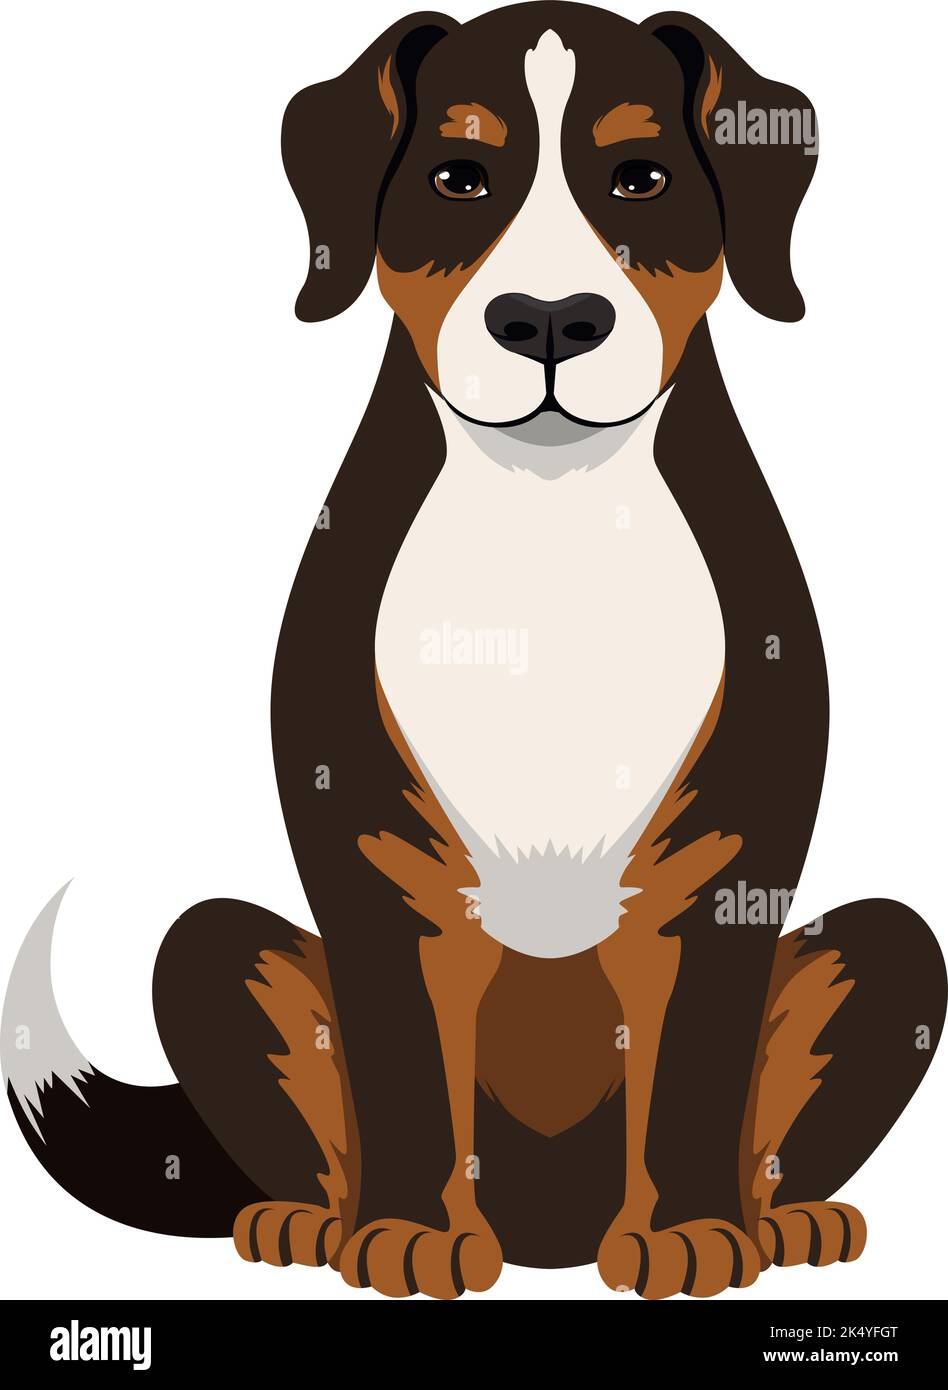 Sennenhund icon. Swiss mountain dog. Pure breed pet Stock Vector